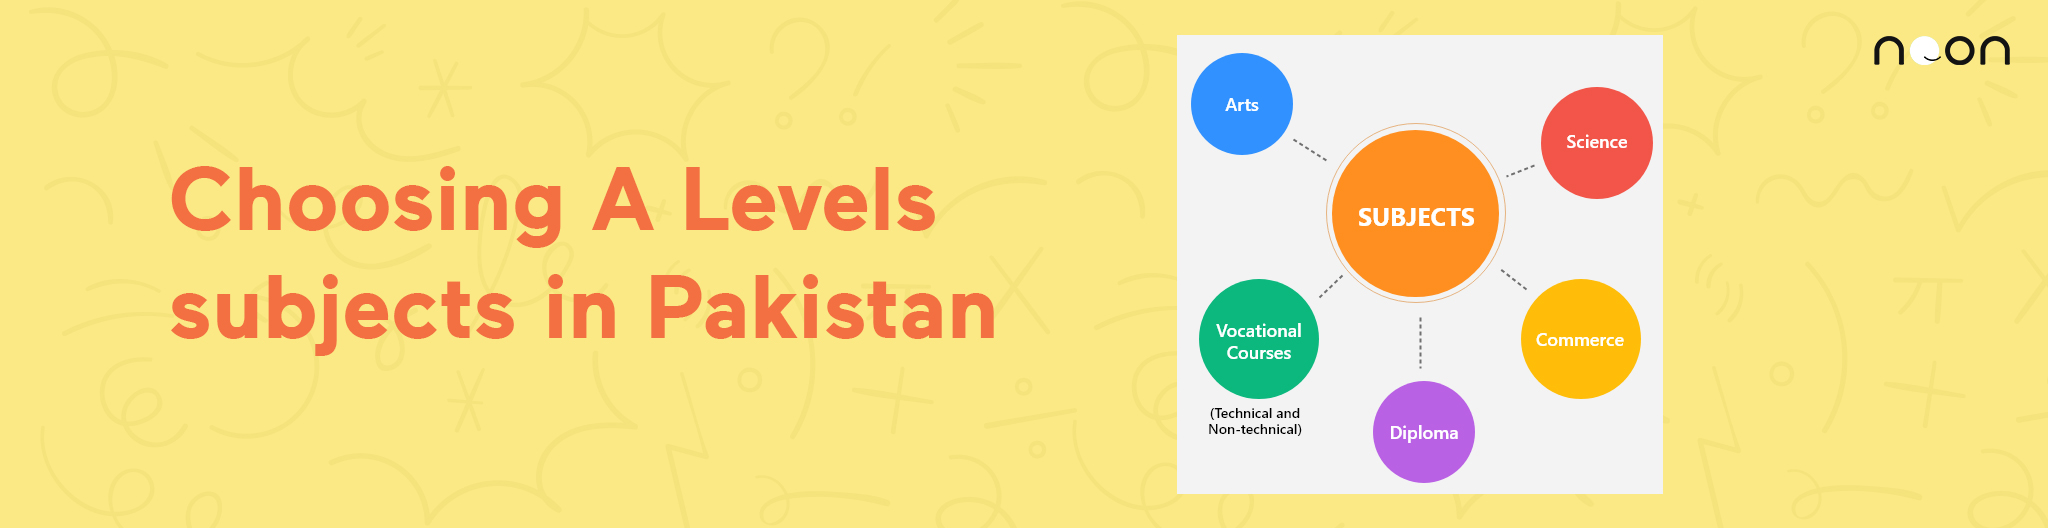 Choosing A Levels subjects in Pakistan